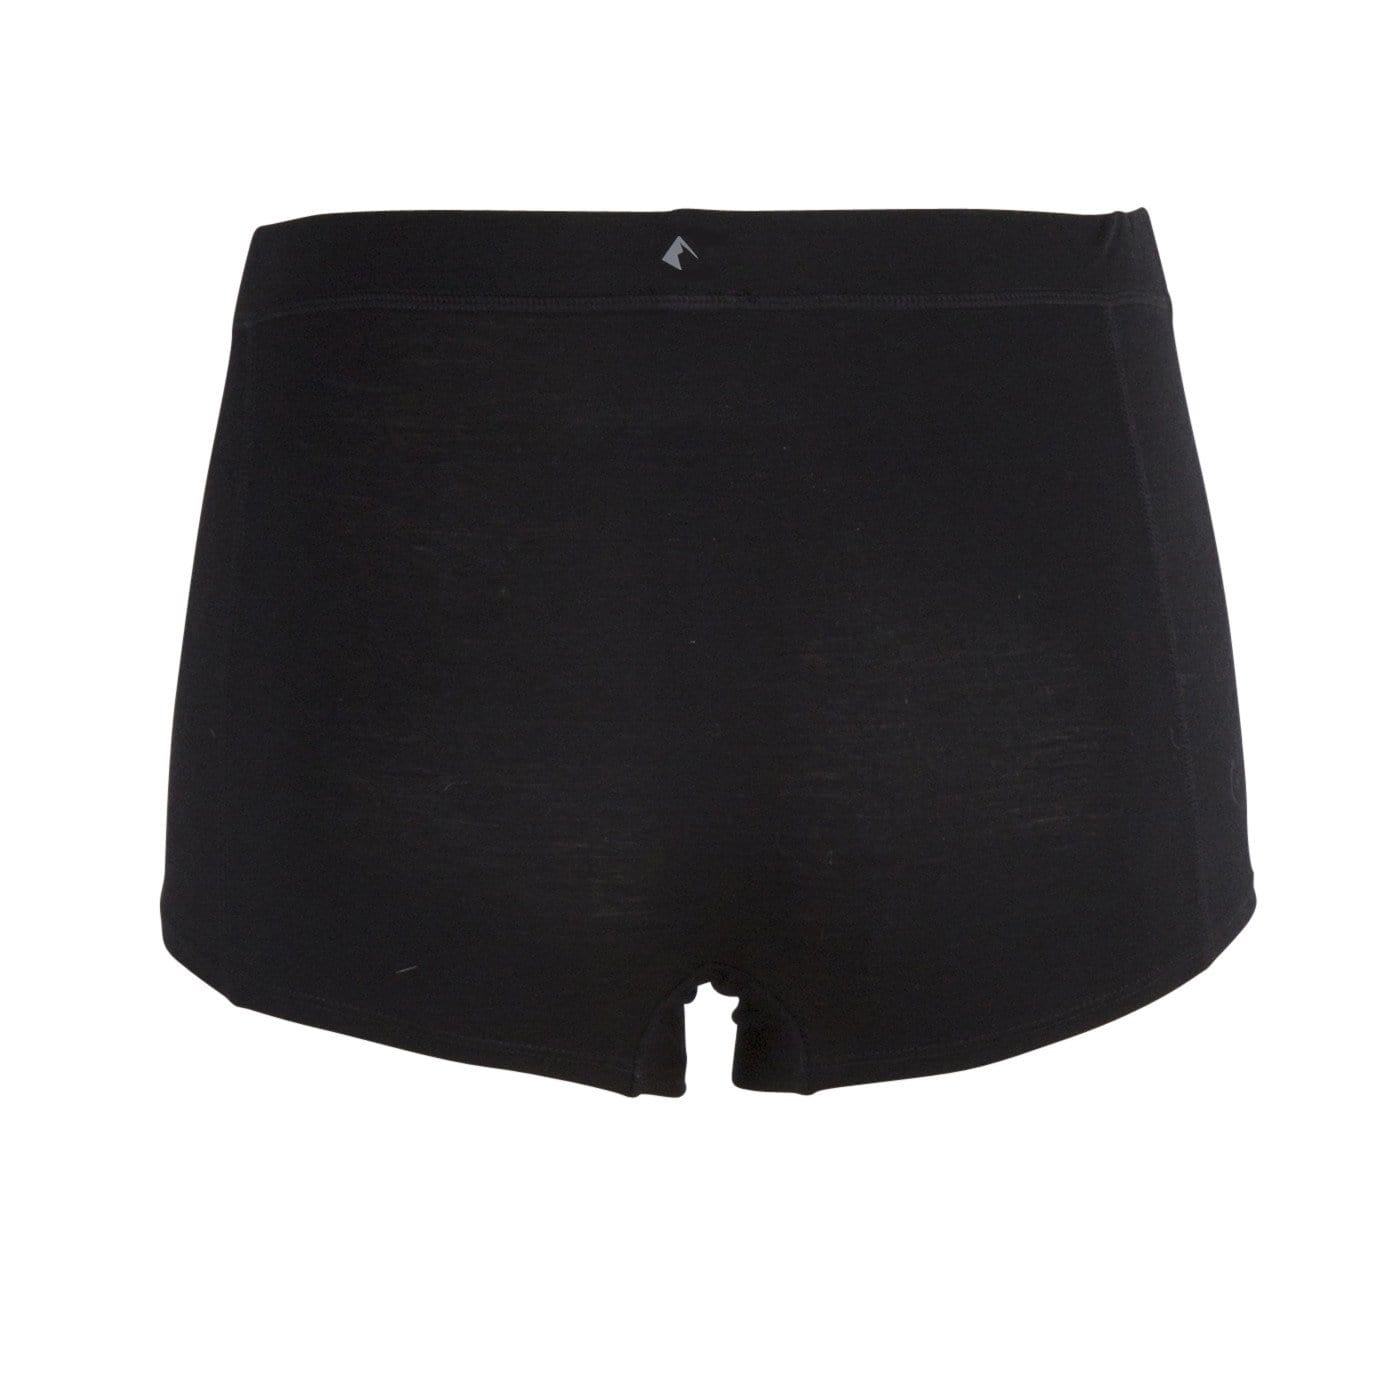 Back of black Merino wool underwear boy shorts